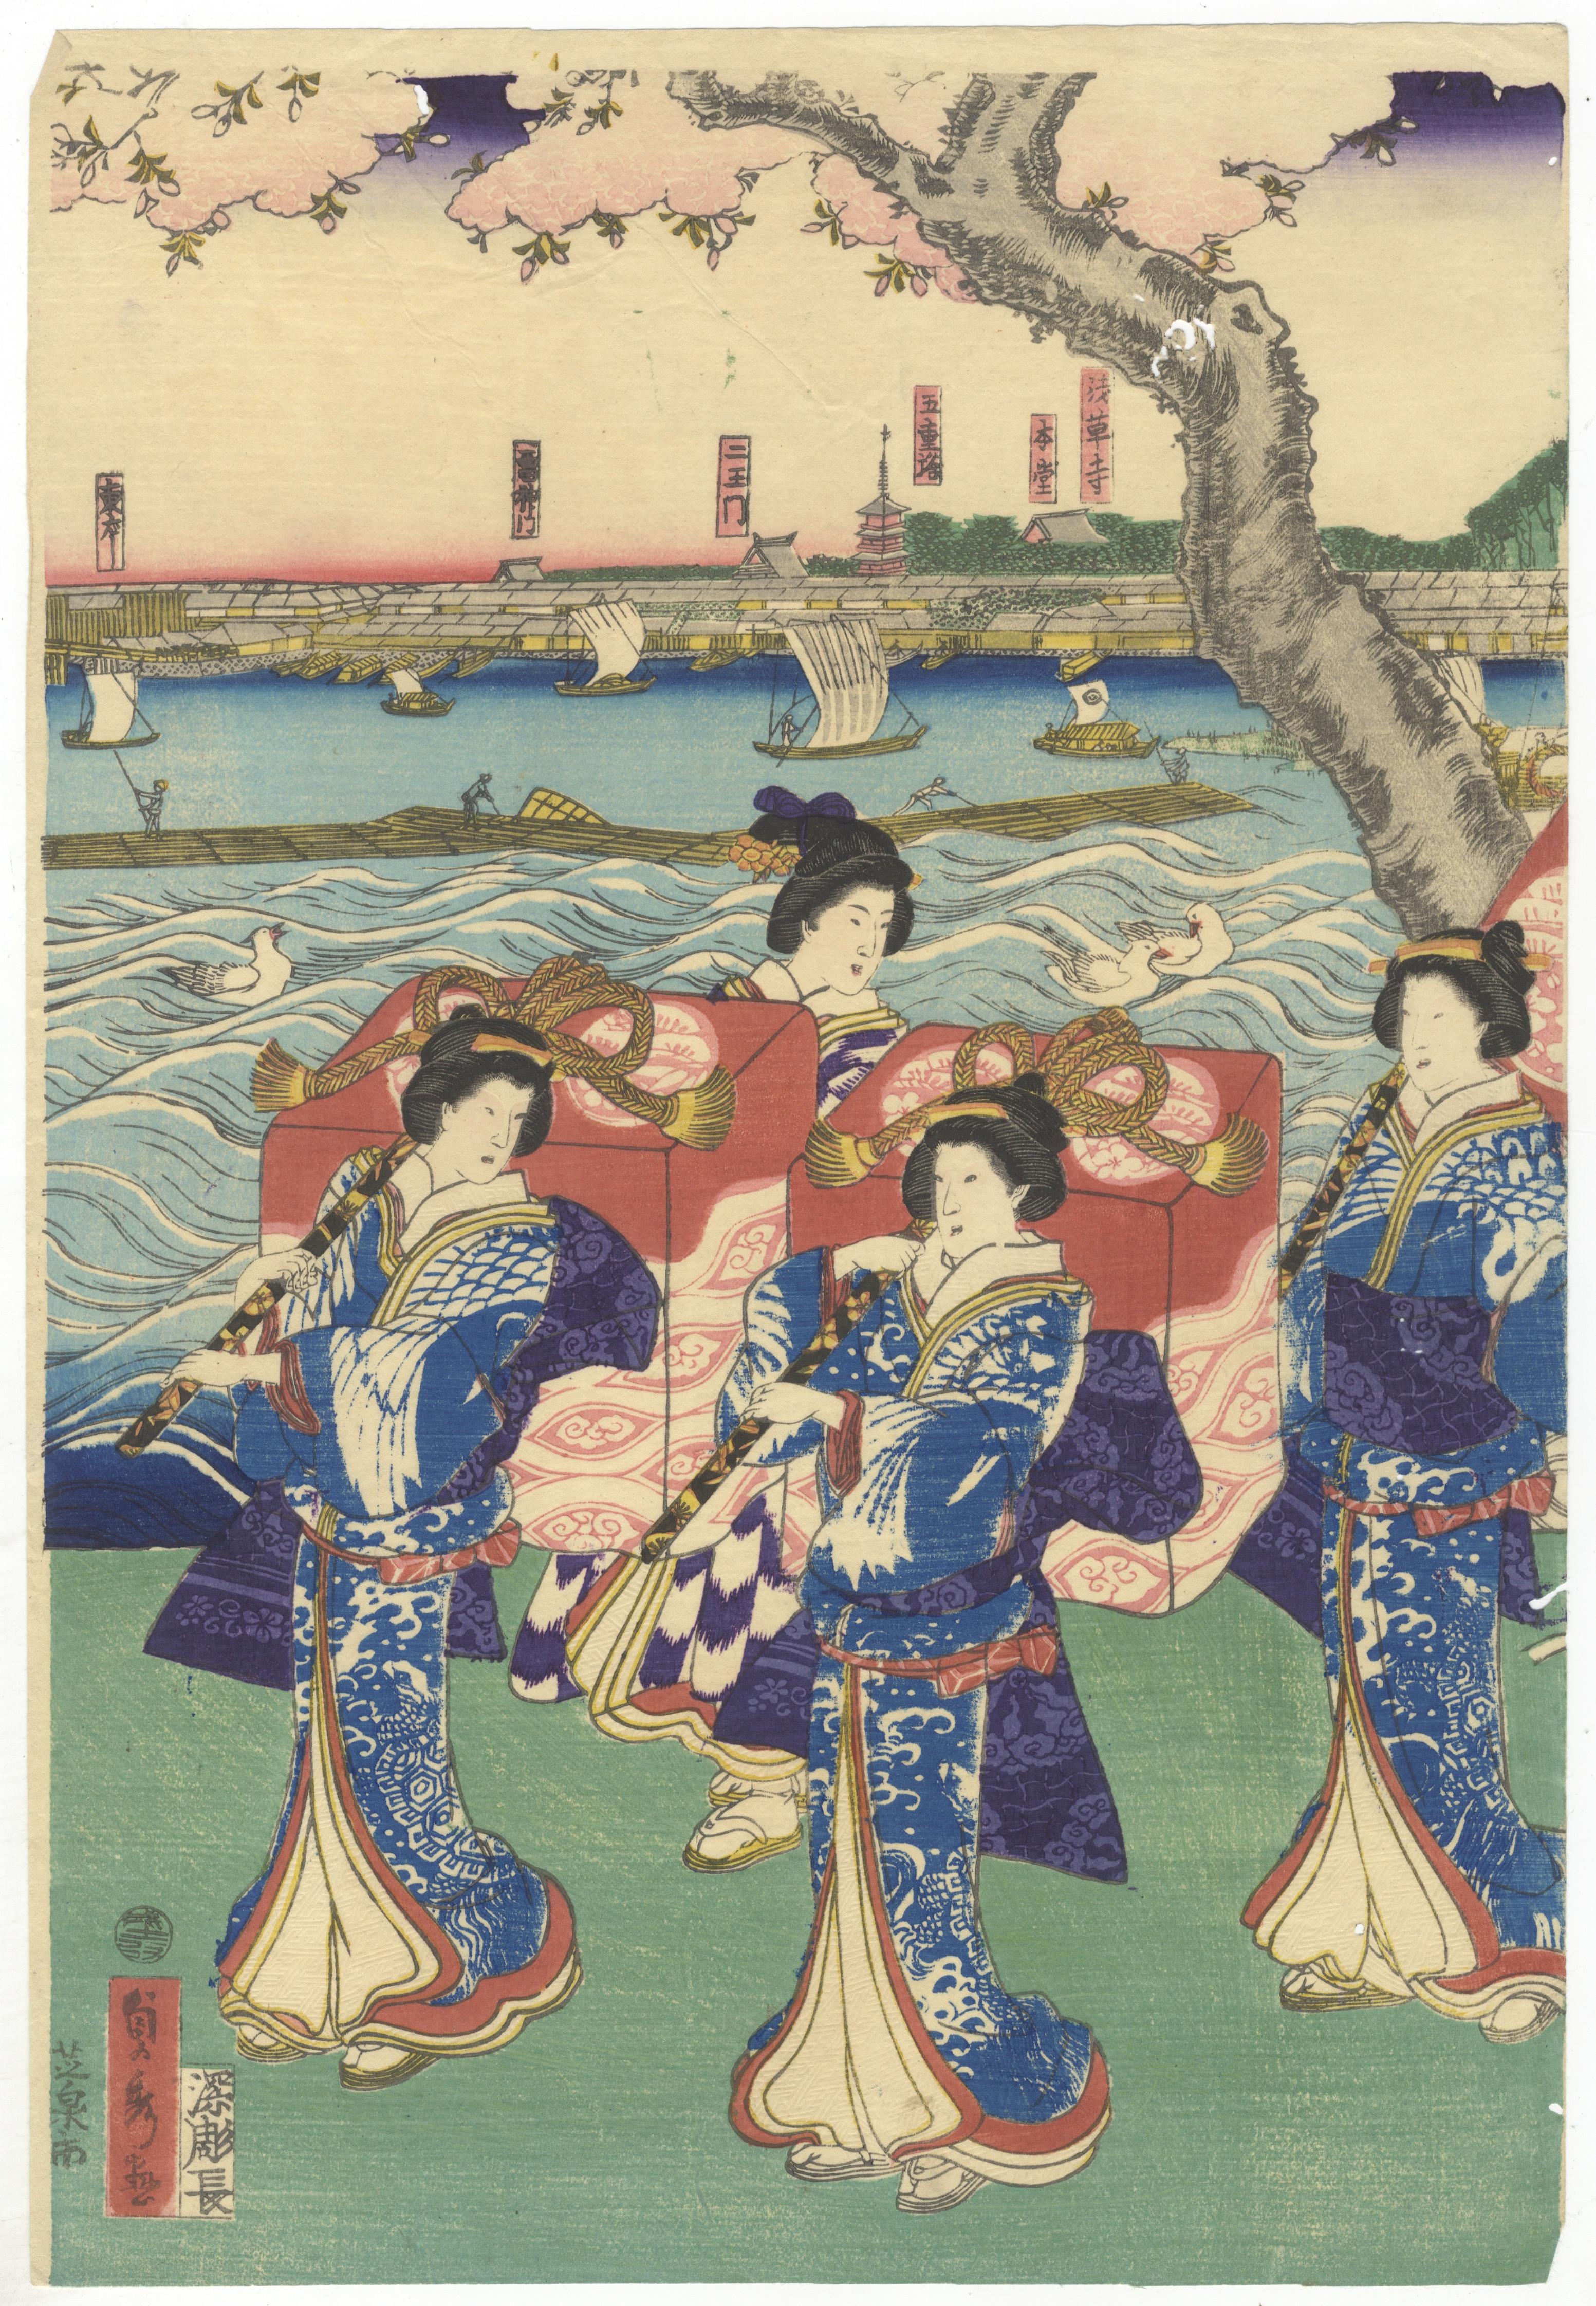 Artist: Sadahide Utagawa (1807-1873)
Description: Court ladies going out for cherry blossom viewing.
Publisher: Izumiya Ichibei
Date: 1843
Dimensions: (R) 25.6 x 36.8 (C) 25.4 x 37.3 (L) 25.4 x 37.1

Utagawa Sadahide was an accomplished woodblock